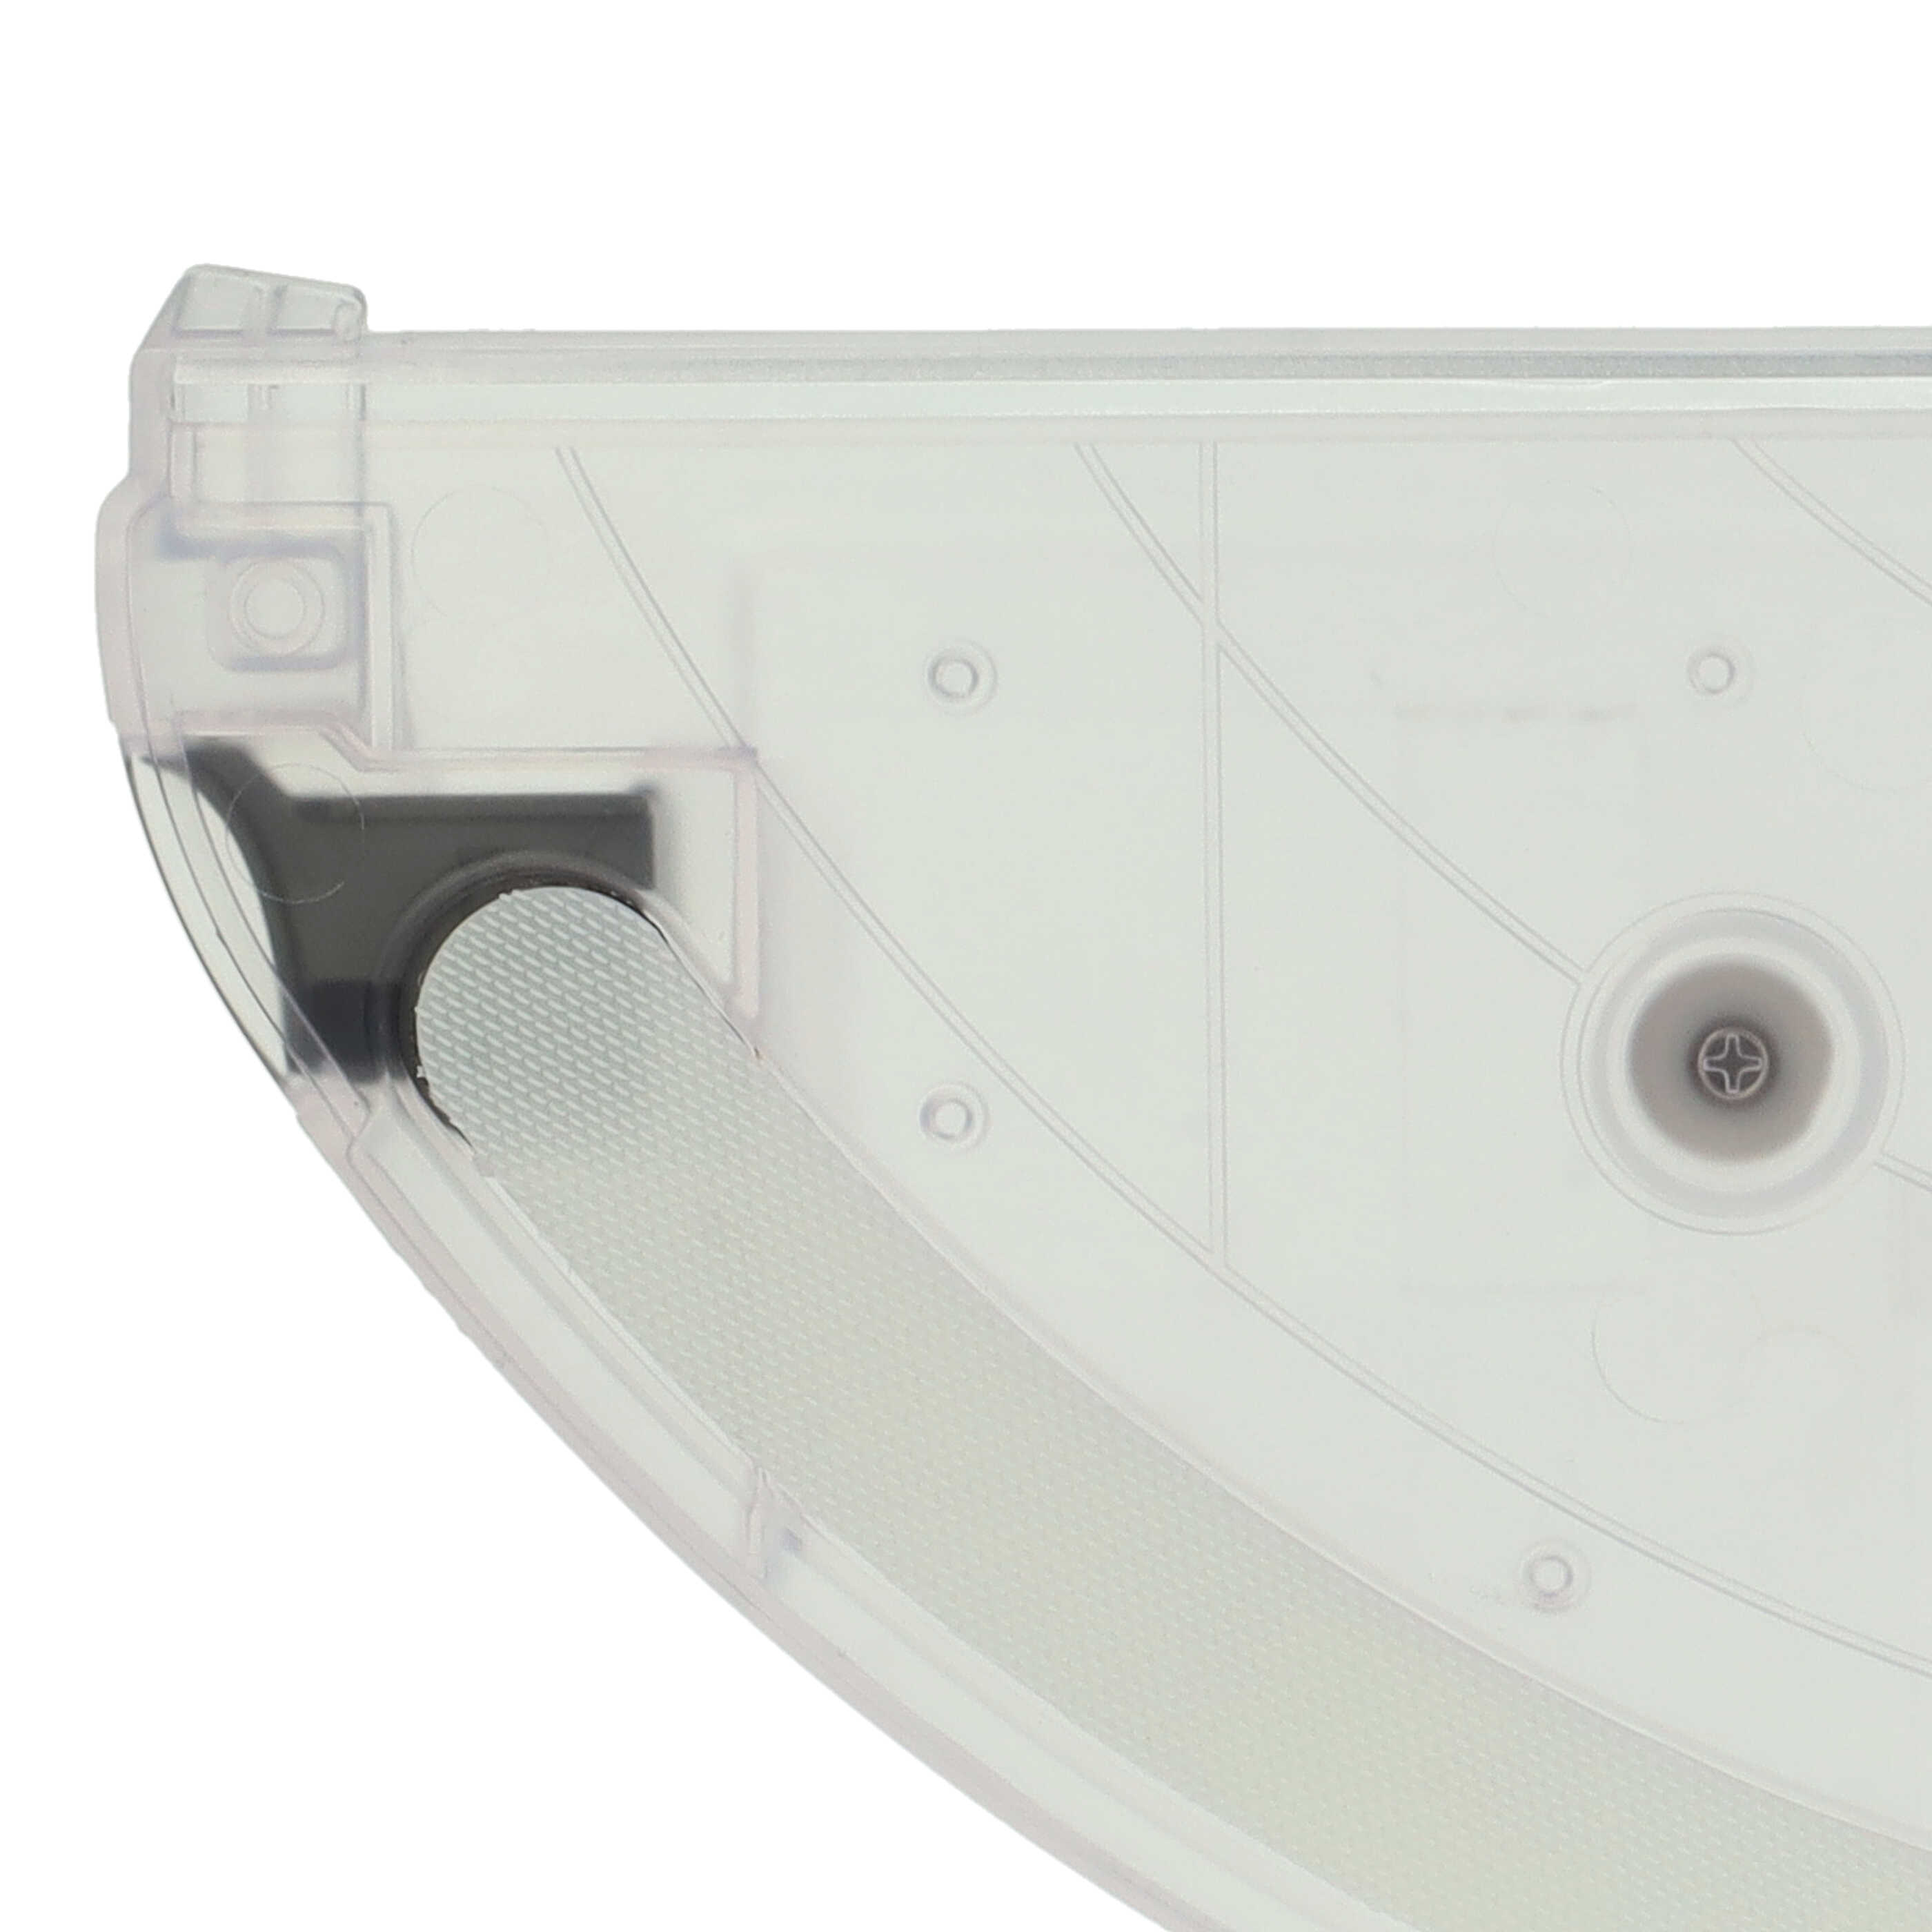 Mop Plate suitable for Roborock S5 Max Robot Vacuum Cleaner - ABS Plastic, transparent / black